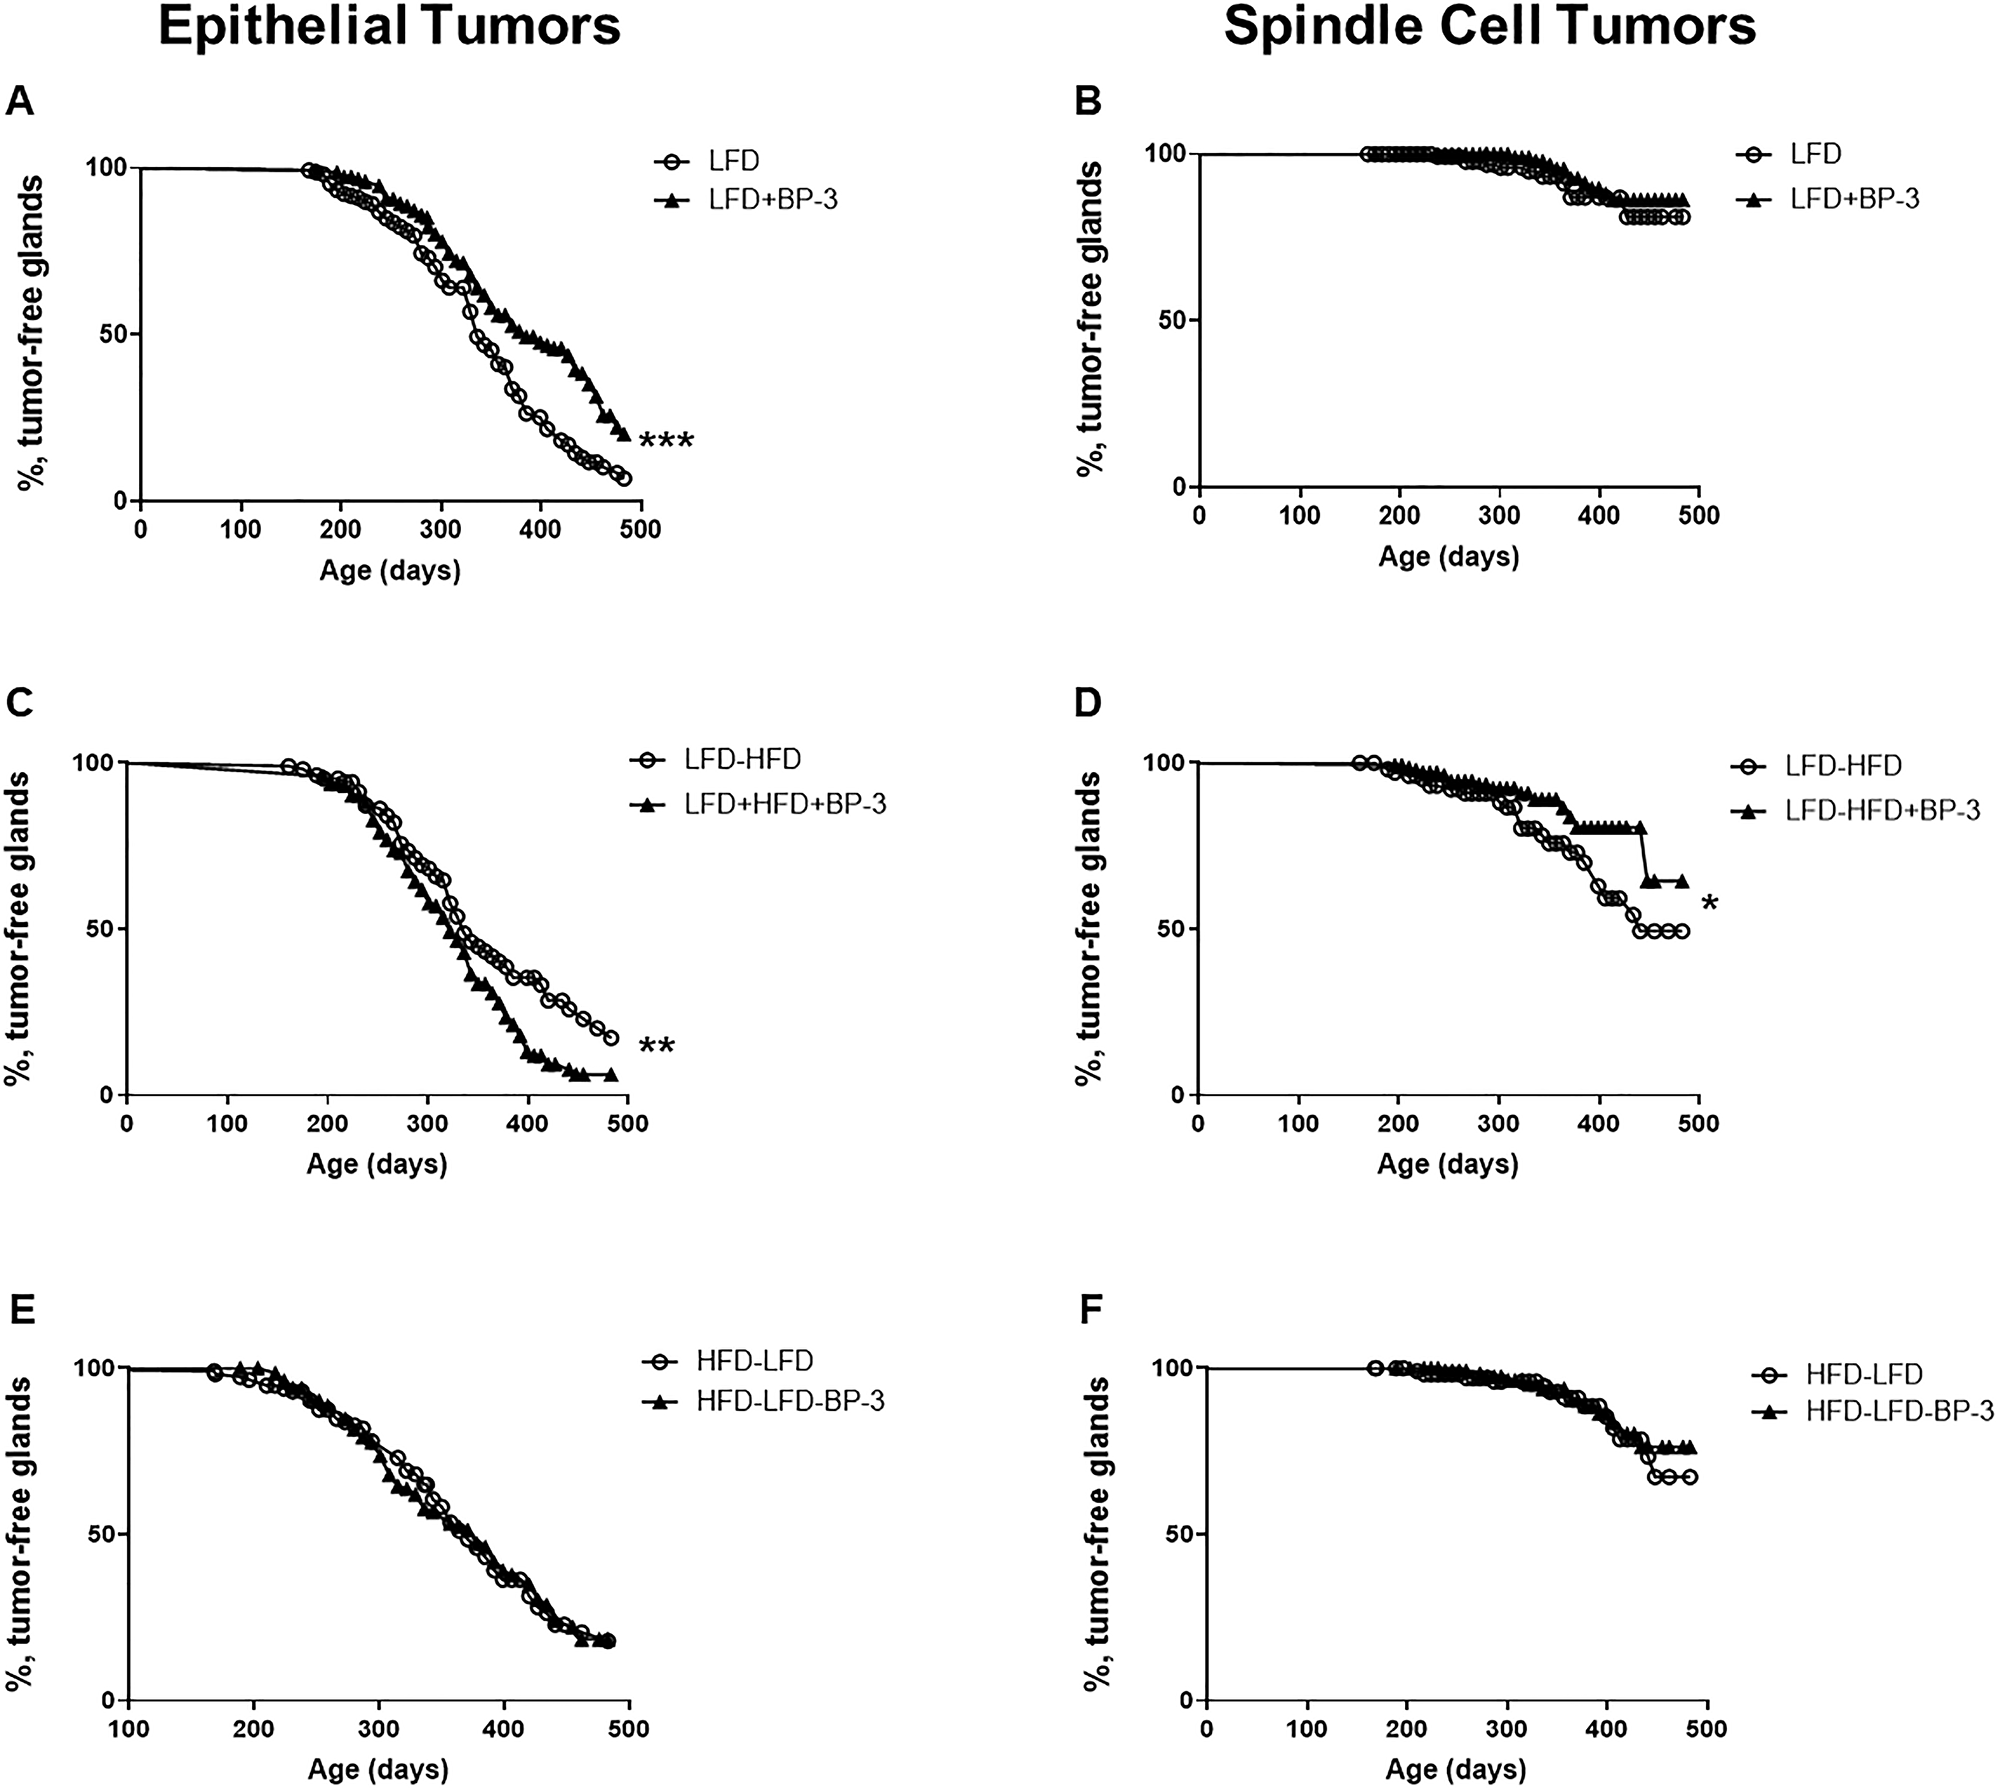 BP-3 reduced epithelial tumorigenesis on LFD, but promoted epithelial tumorigenesis on an adult-restricted HFD.